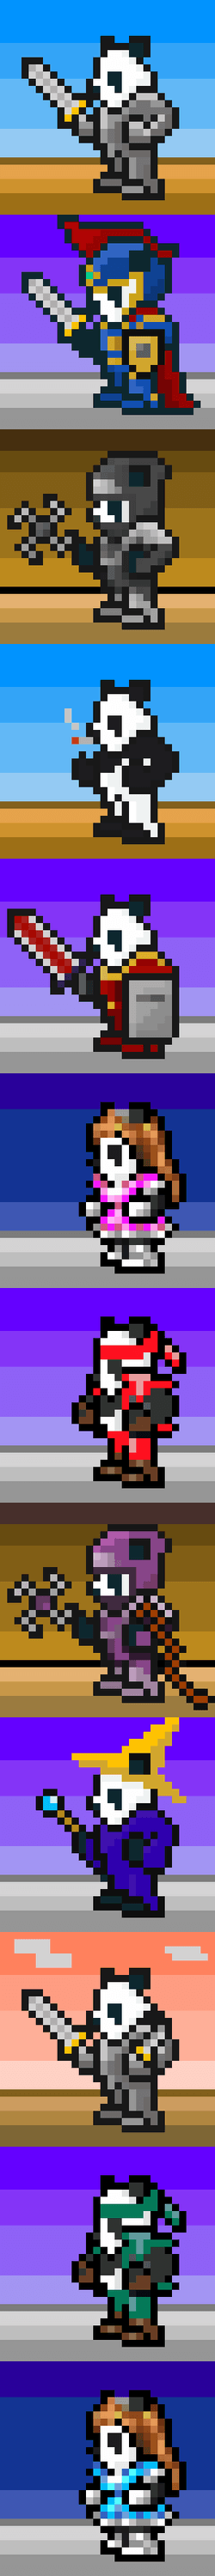 Pixel Panda Heroes collection image